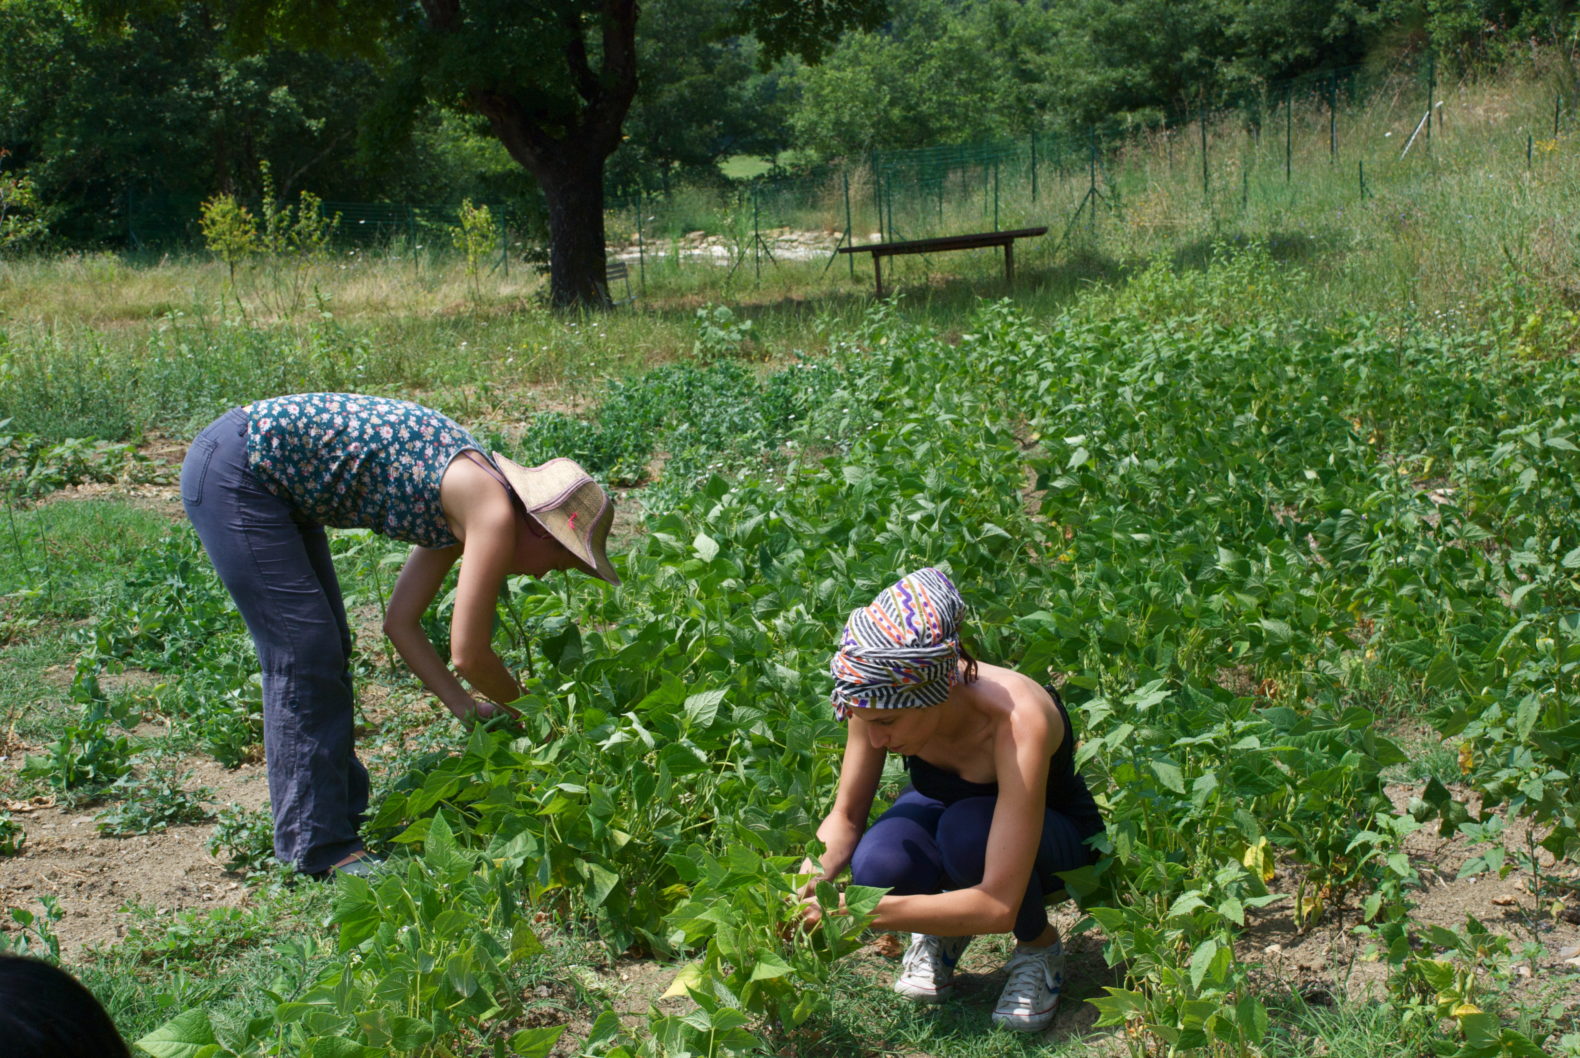 outside-own-garden-vegetable-fruits-women-working-eremito-italy